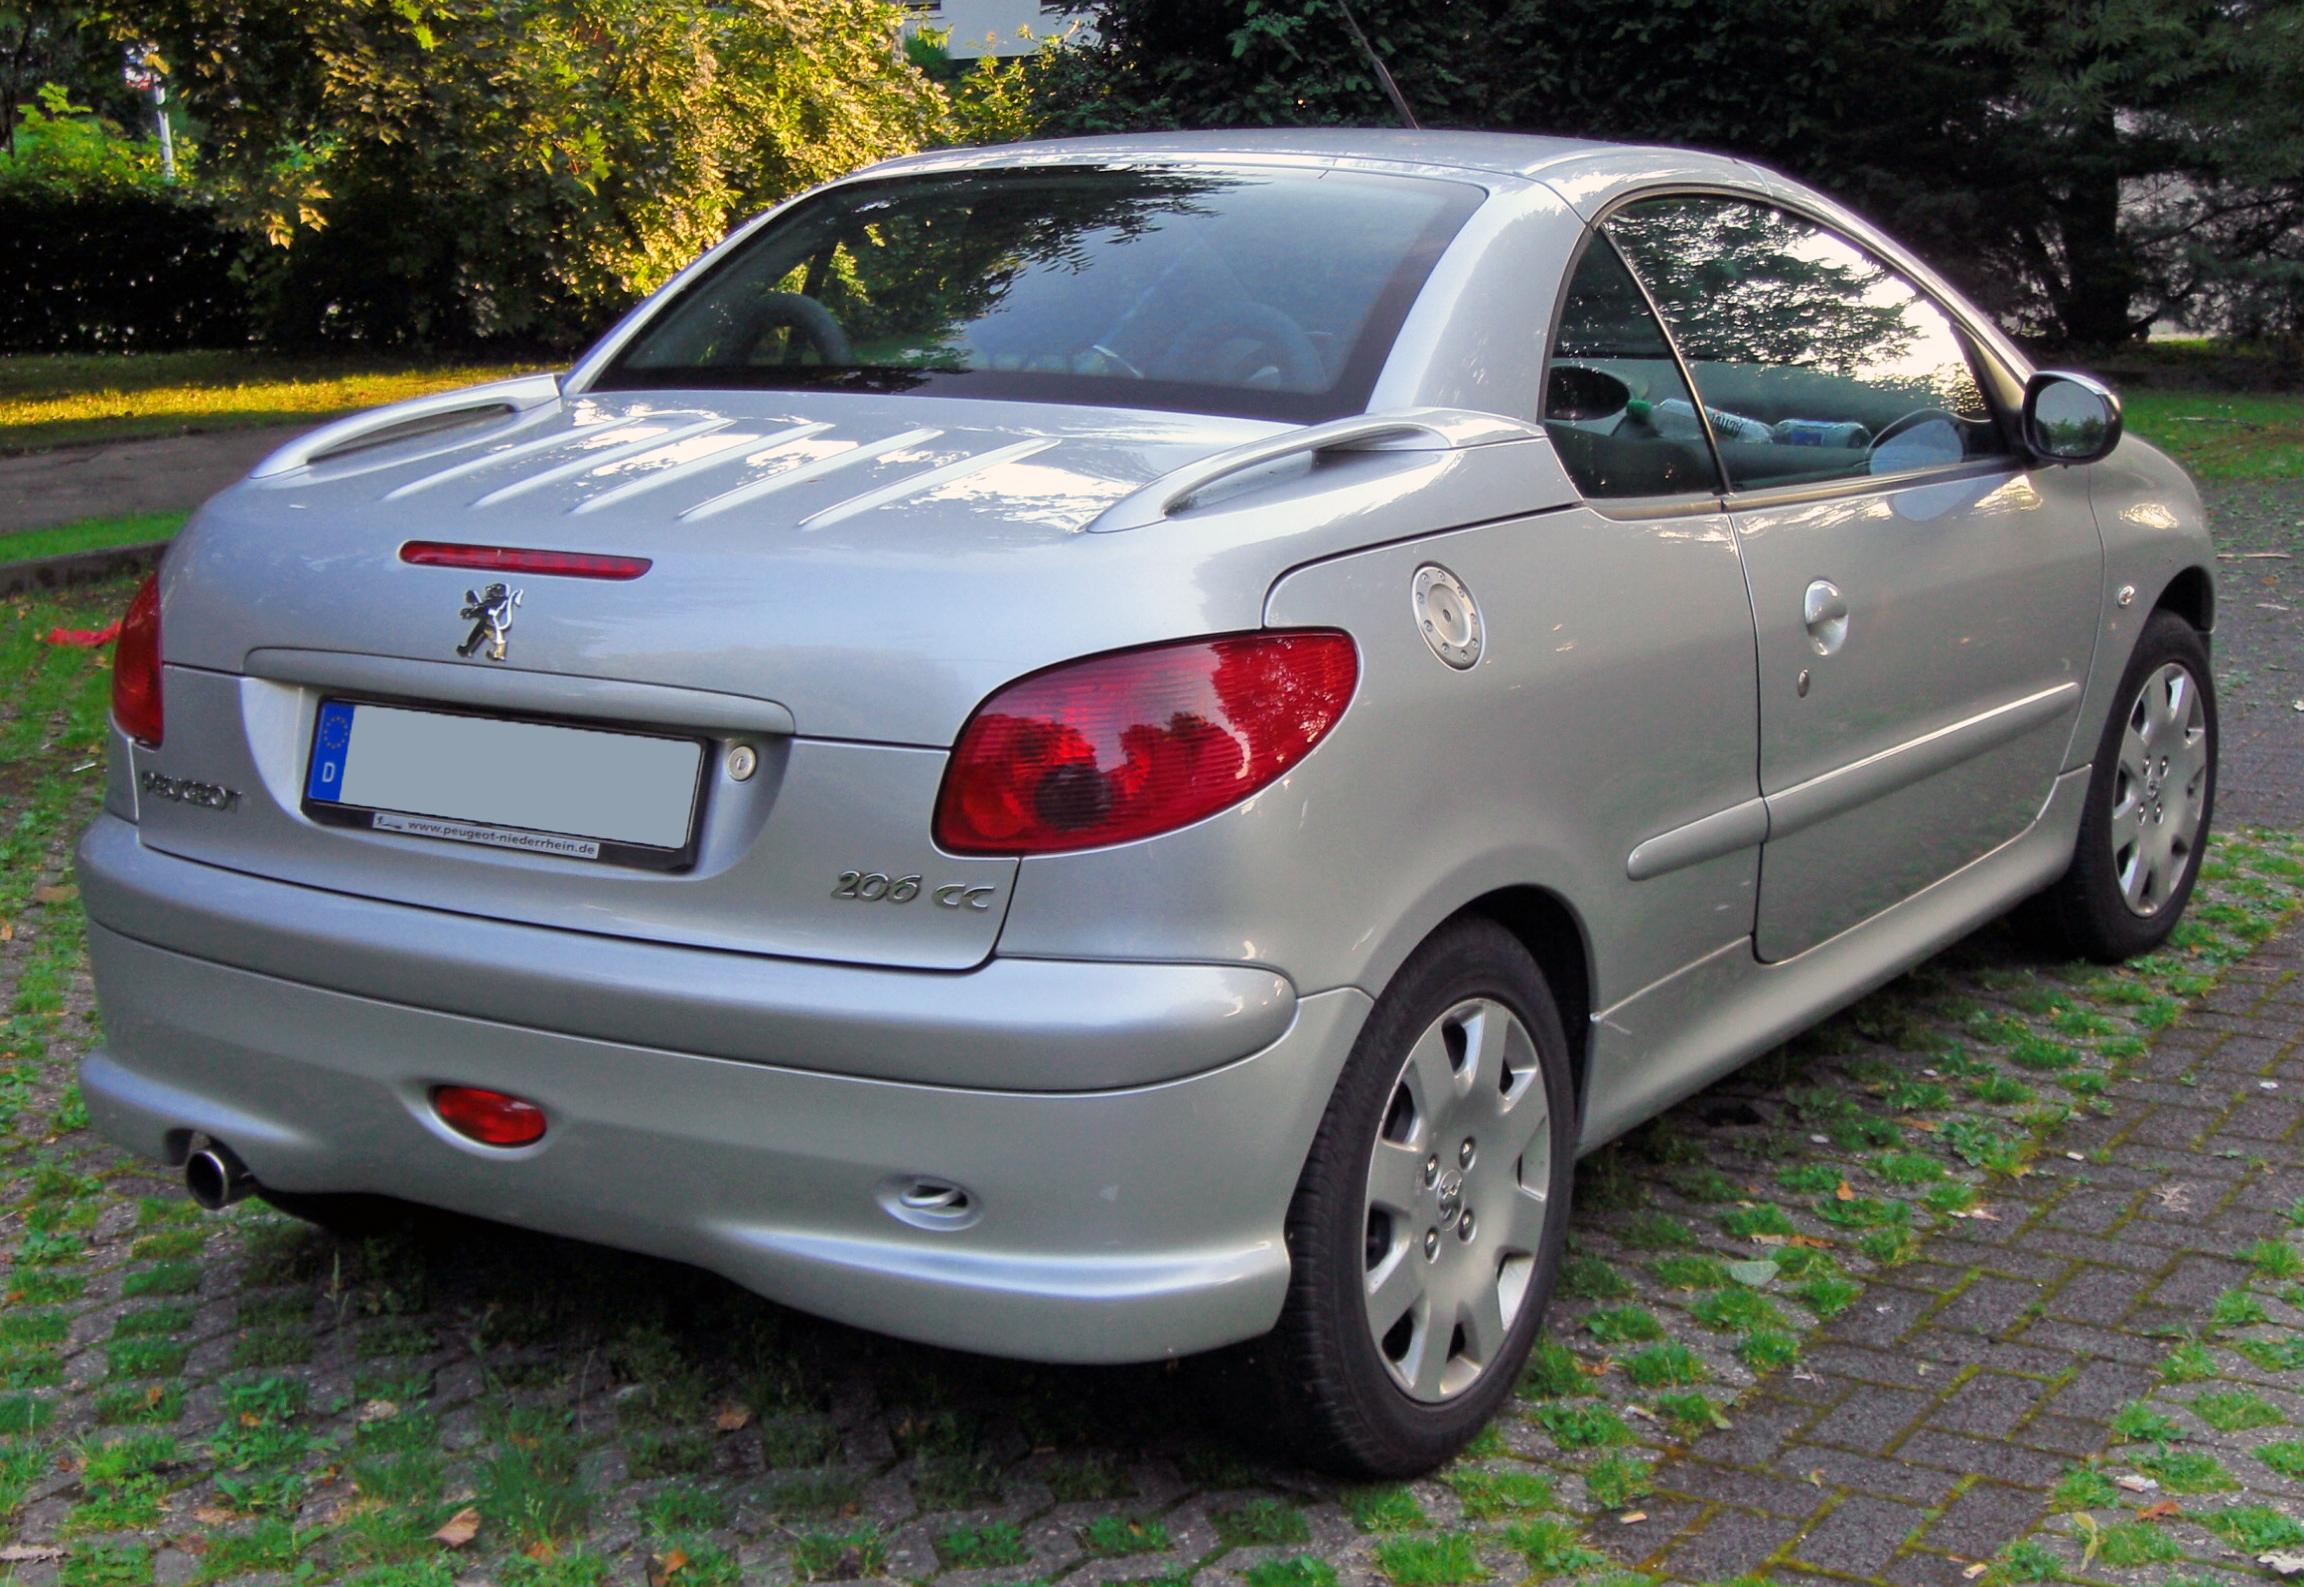 File:Peugeot206-Tuning.jpg - Wikimedia Commons